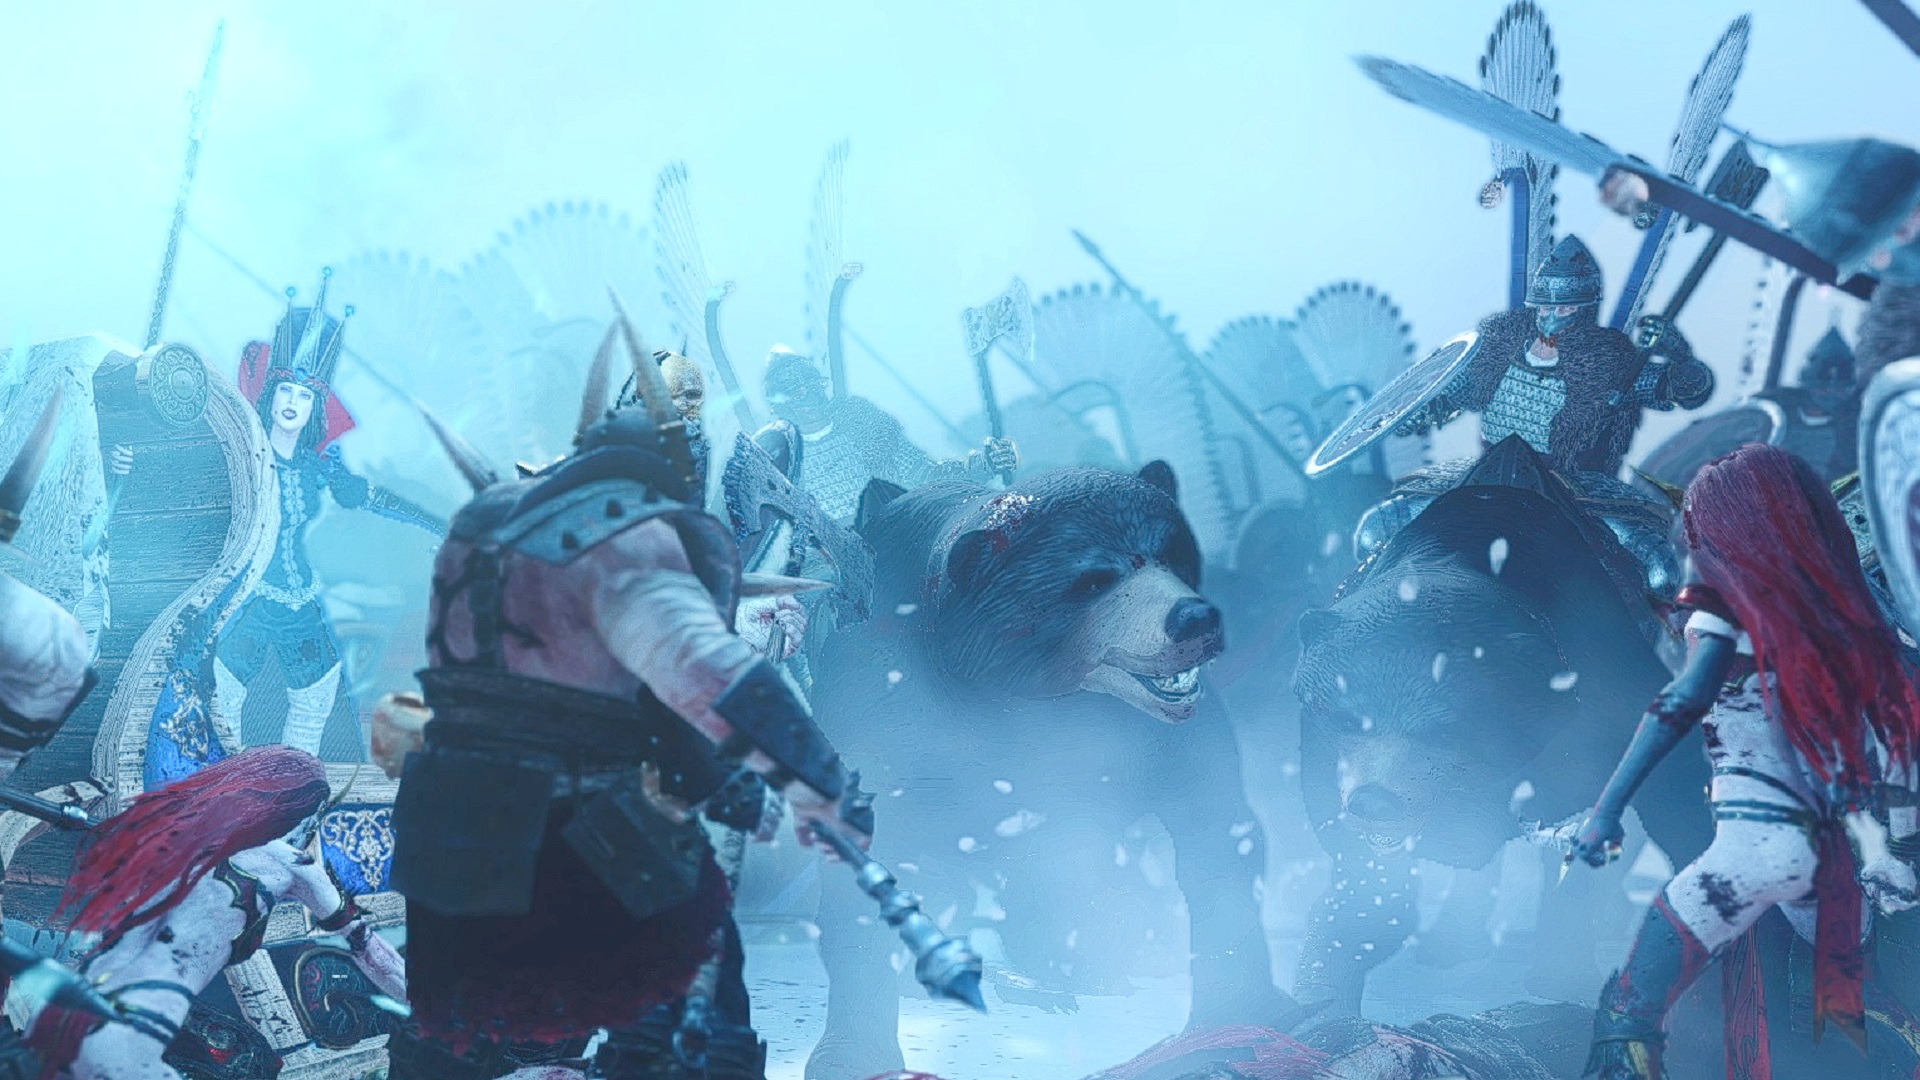 The best mods for Total War: Warhammer II